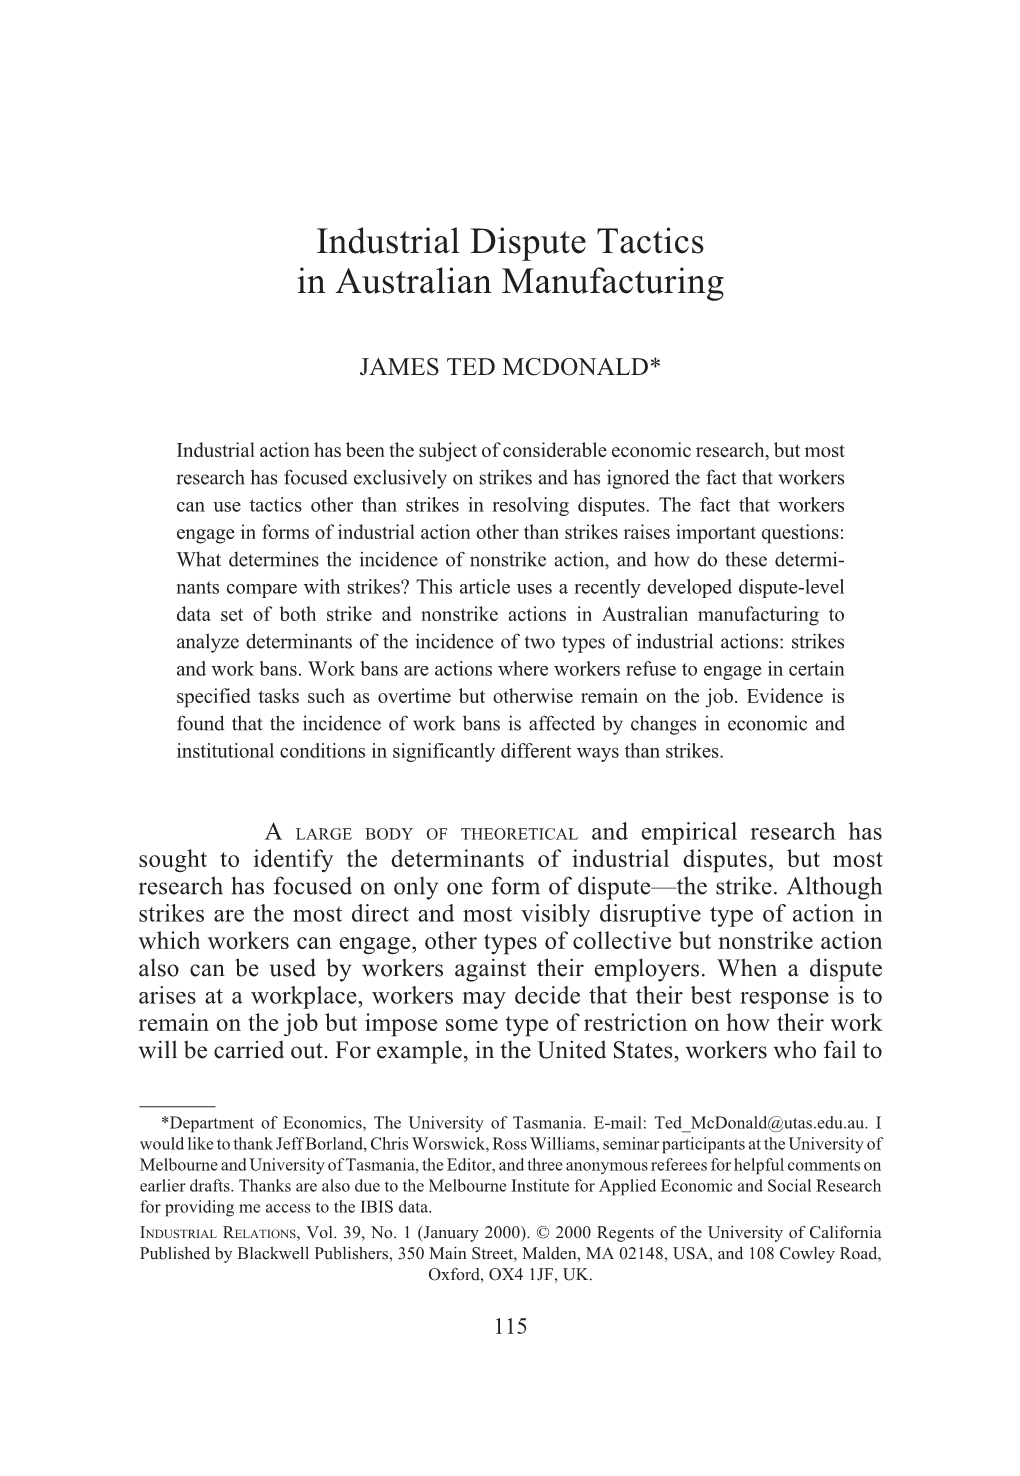 Industrial Dispute Tactics in Australian Manufacturing Industrial Dispute Tactics in Australian Manufacturing